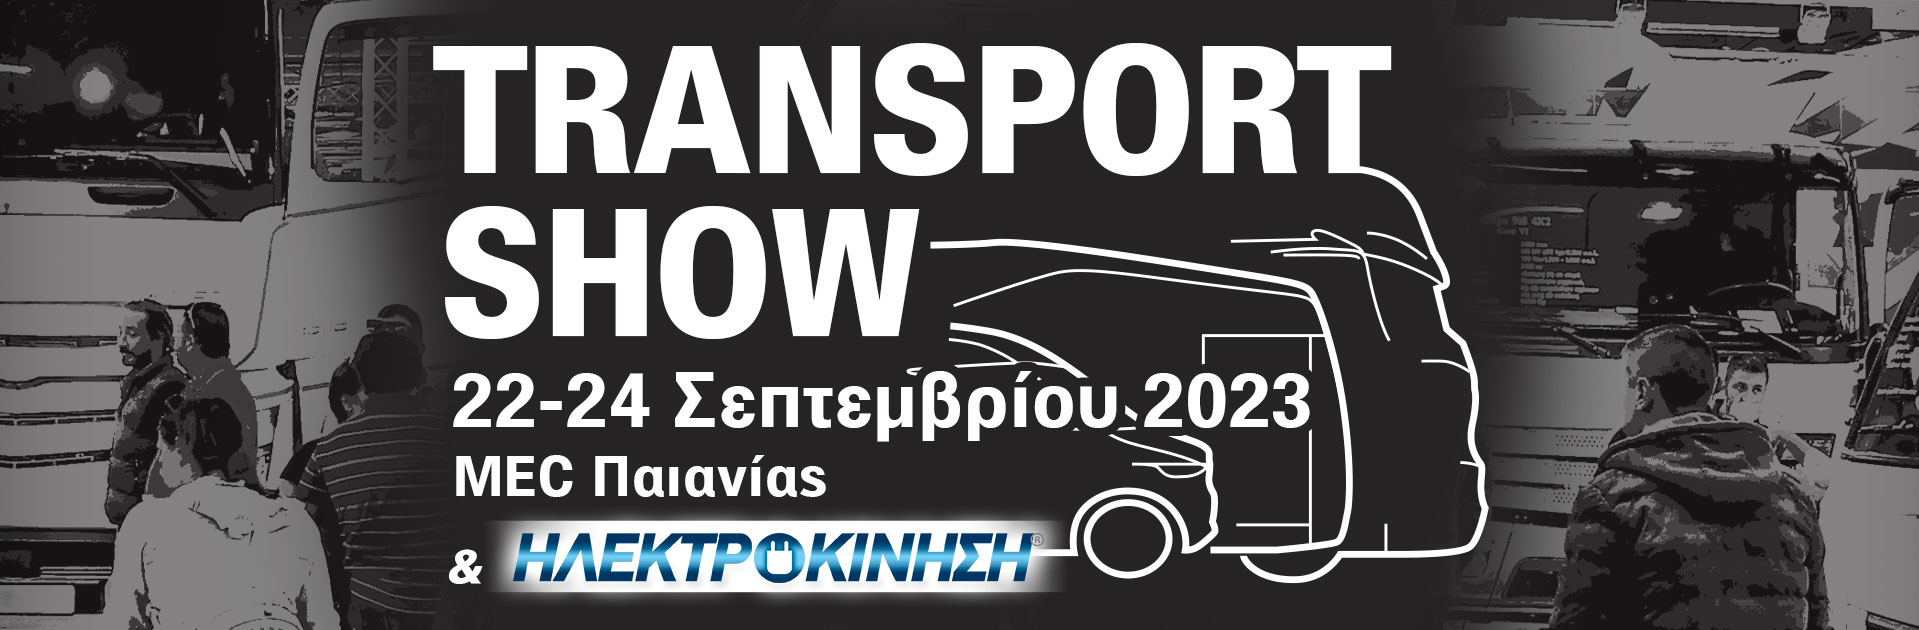 TRANSPORT SHOW - 22-24 Σεπτεμβρίου 2023 - MEC Παιανίας